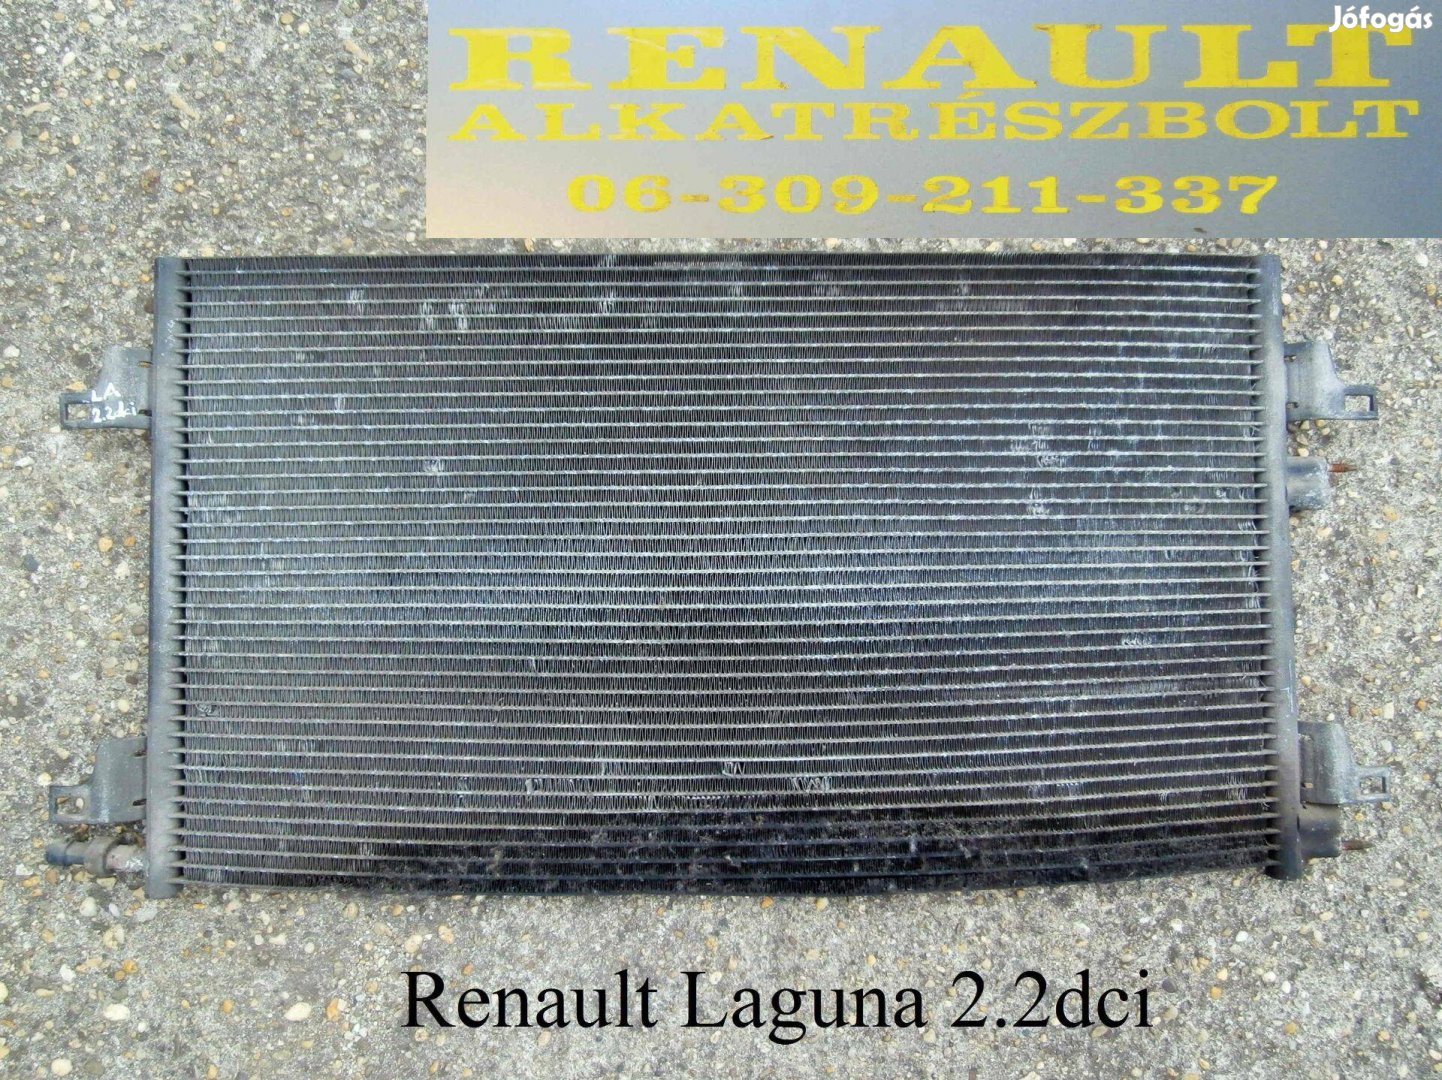 Renault Laguna 2.2dci klímahűtő